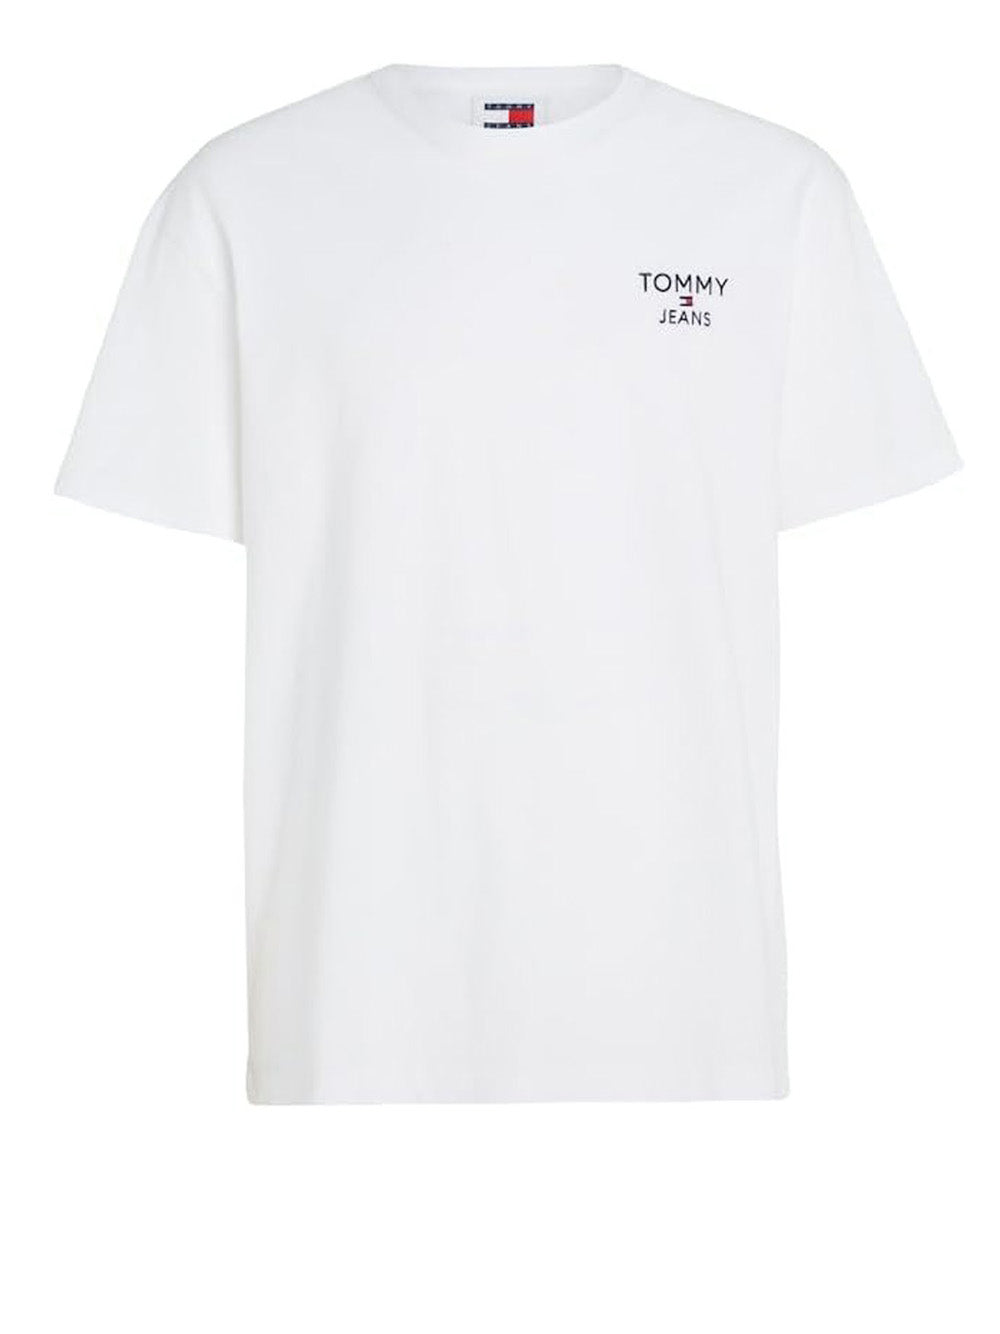 TOMMY HILFIGER T-shirt Uomo - Bianco modello DM0DM18872